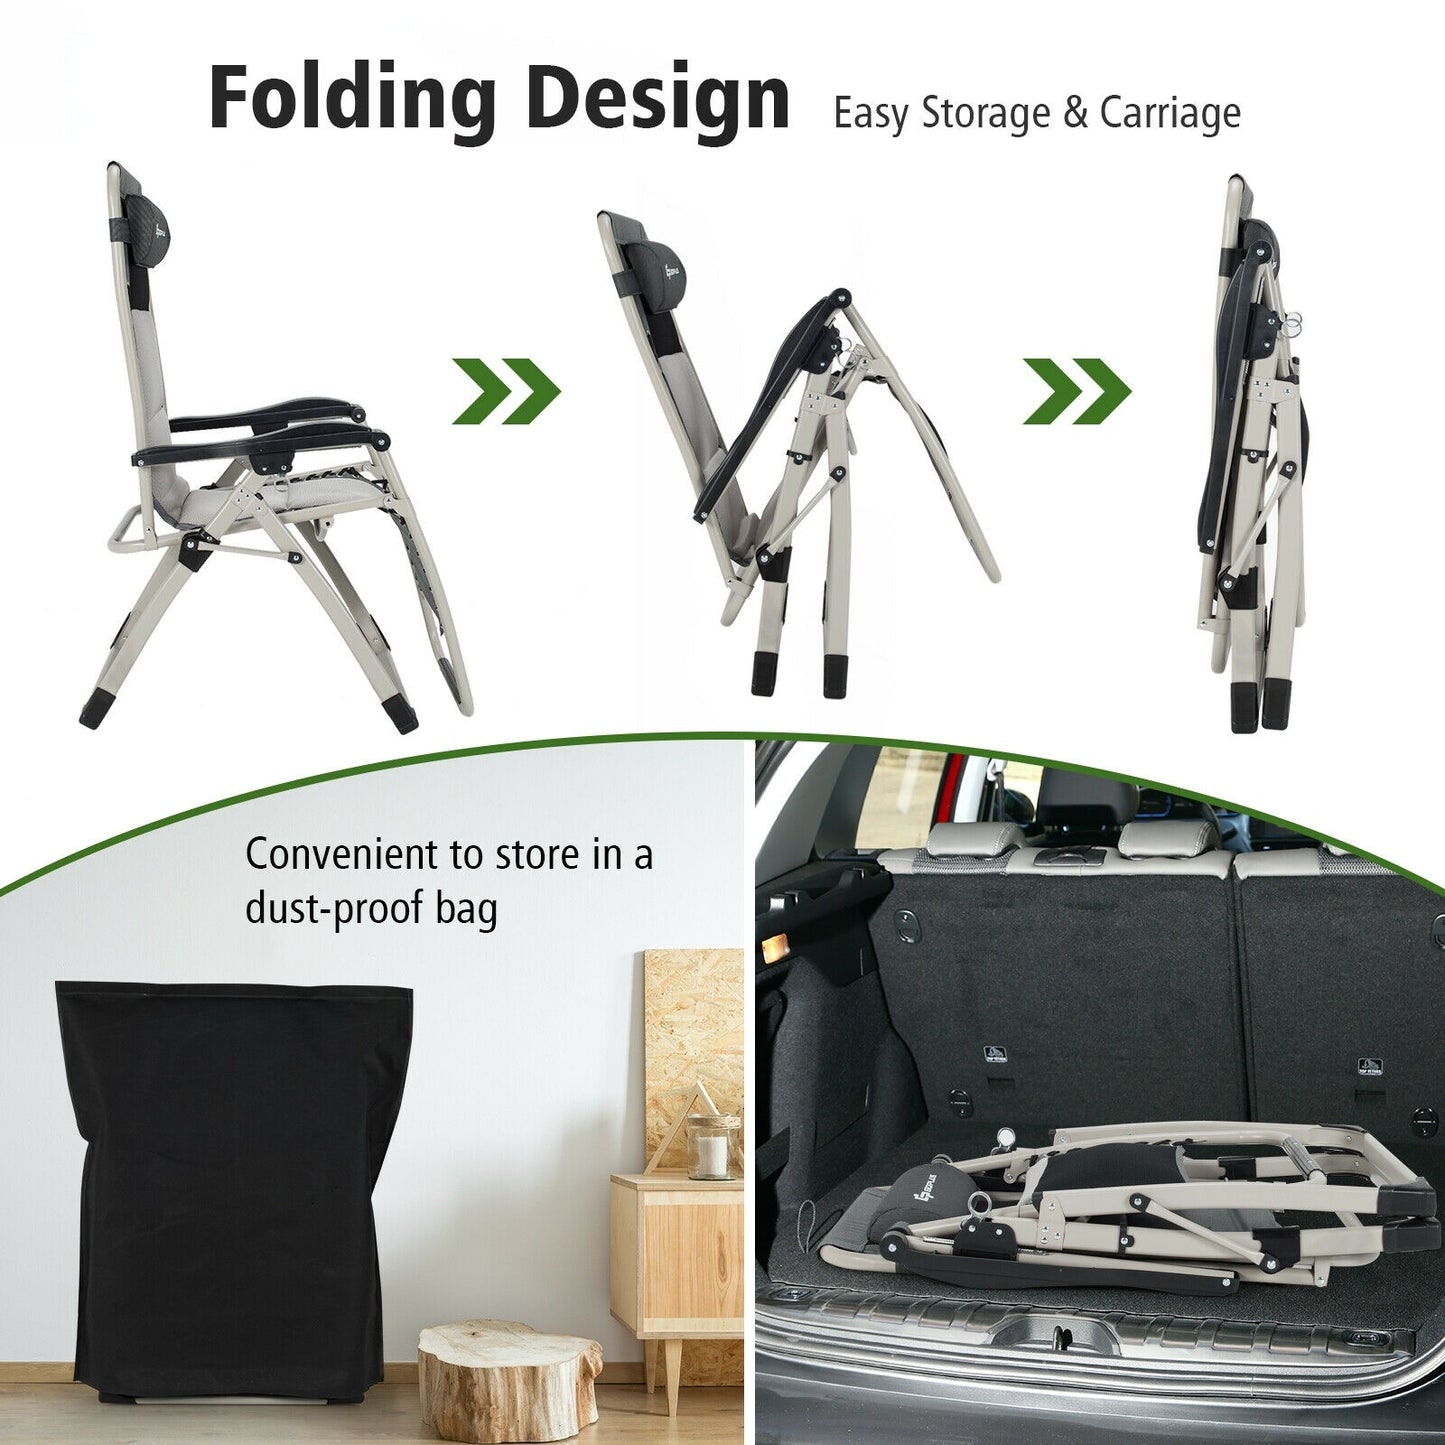 2 Pieces Padded Adjustable Folding Zero Gravity Reclining Lounge Chair-Black